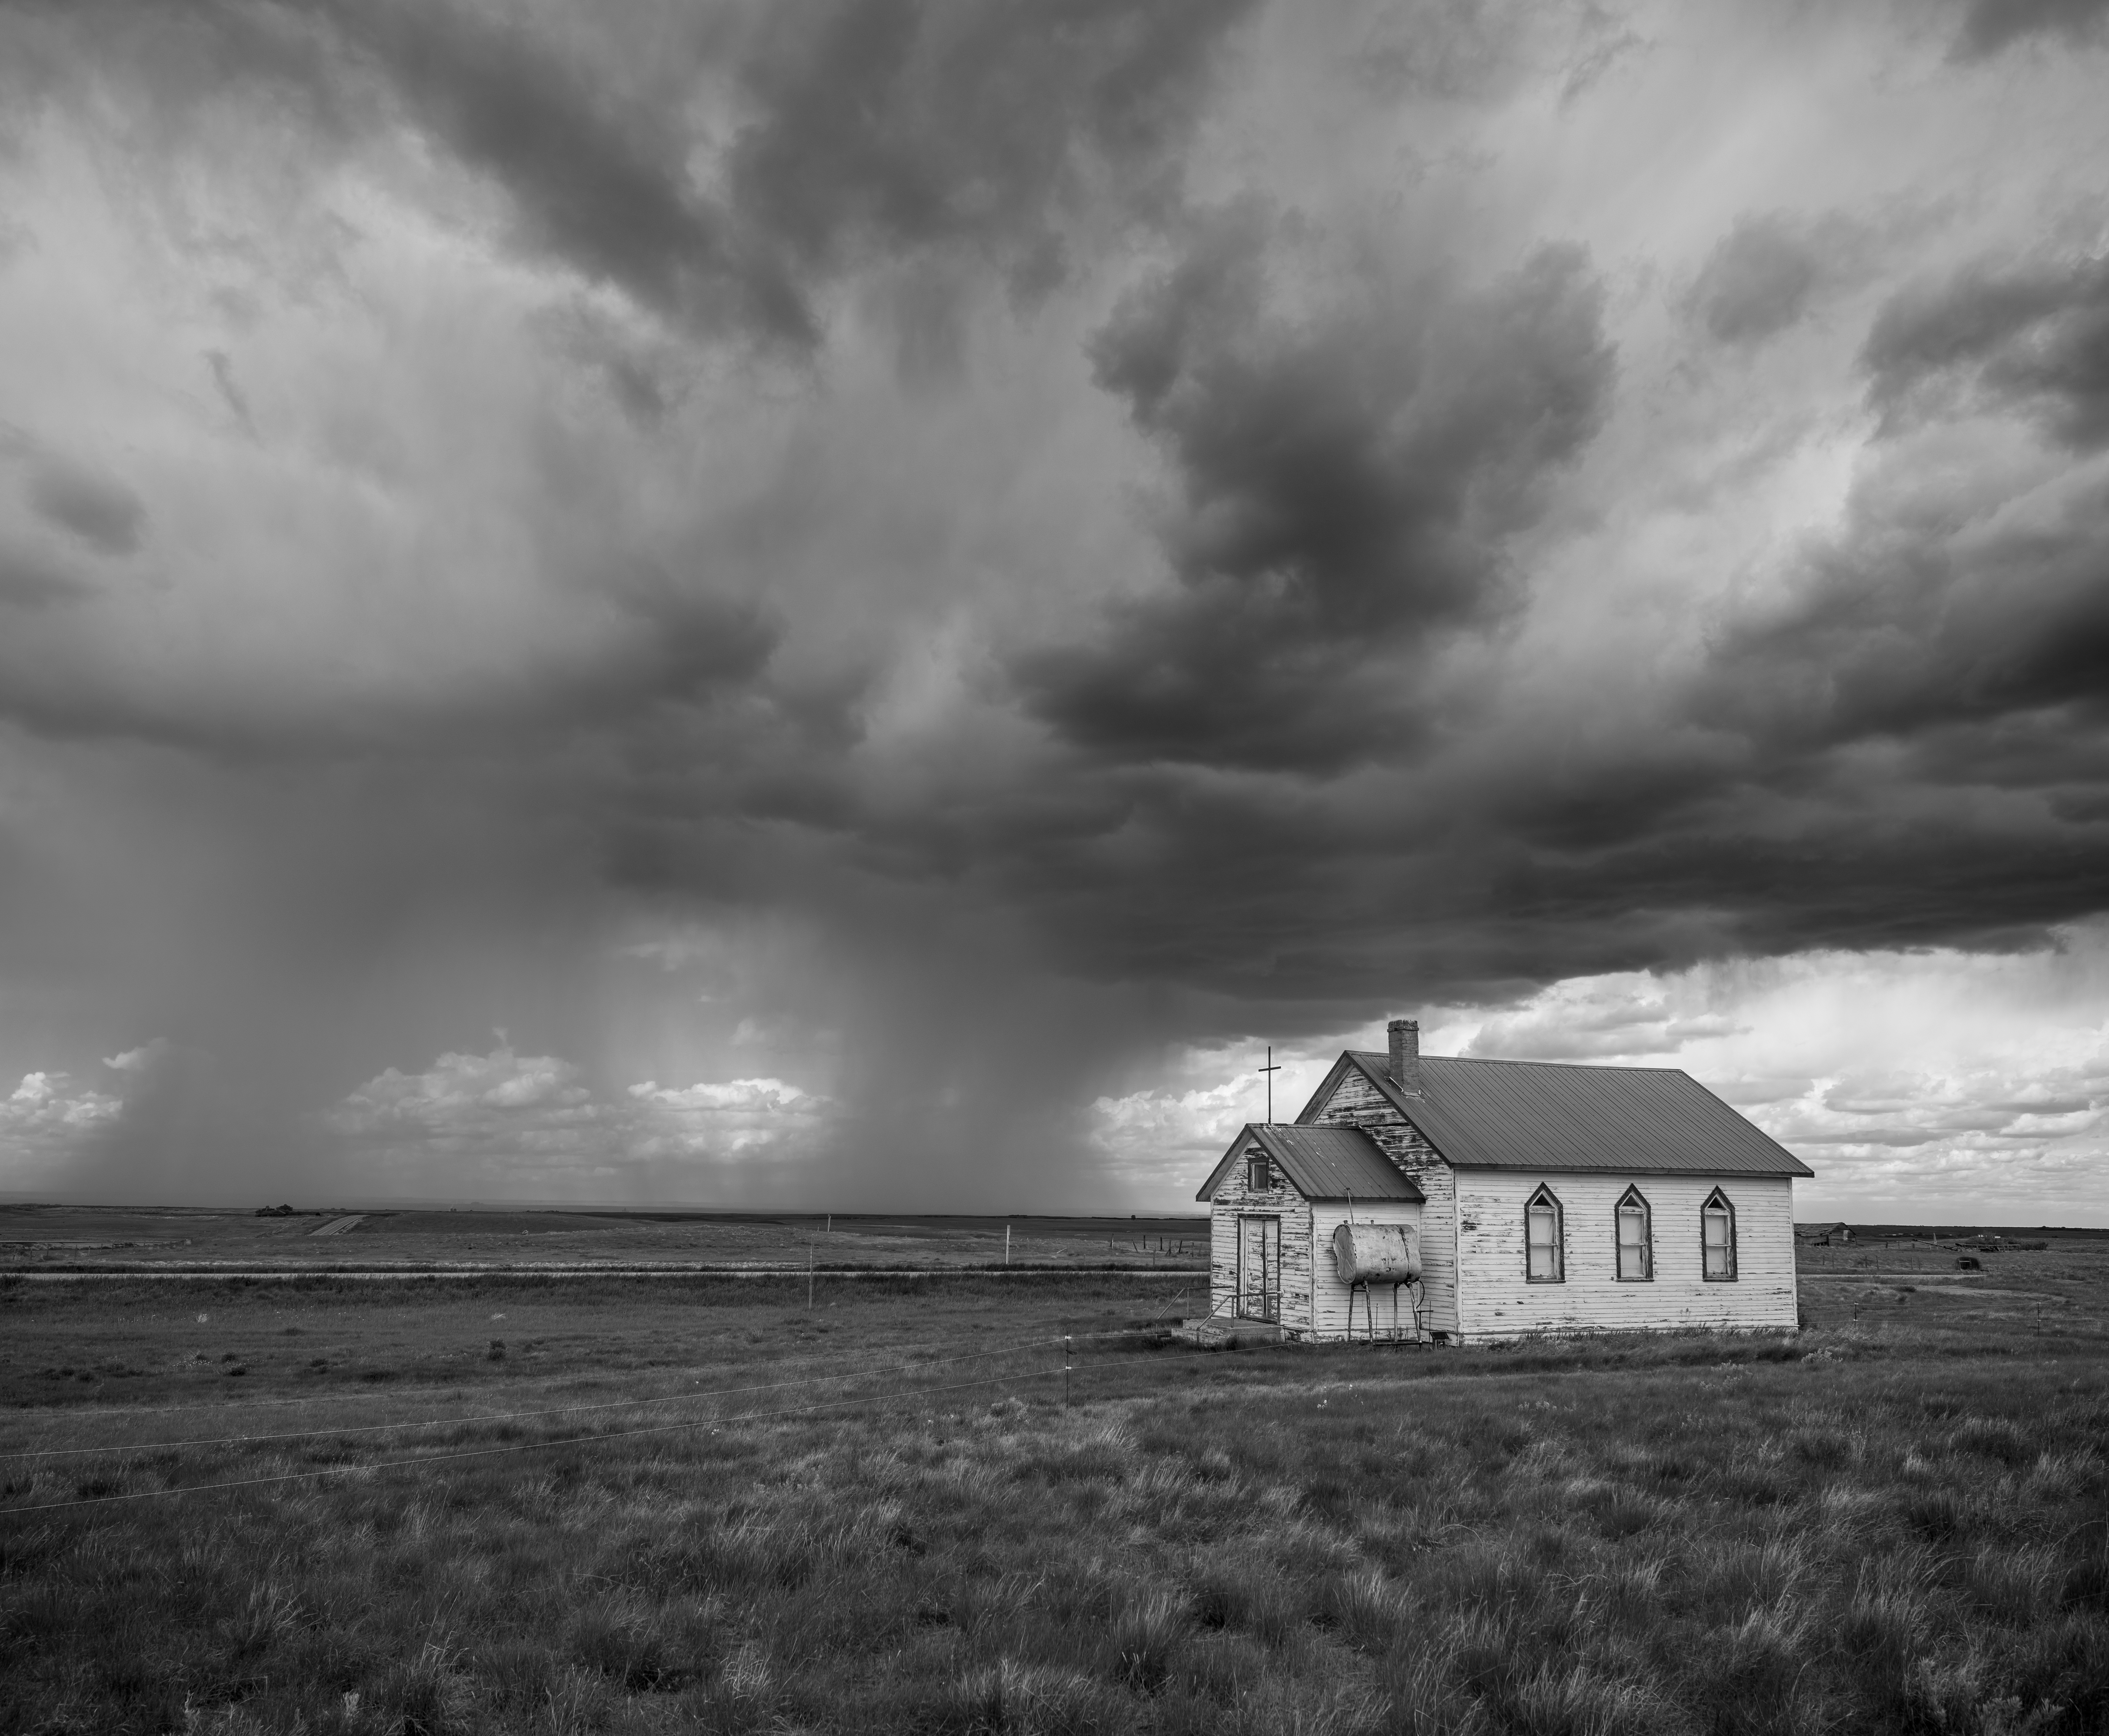 Abandoned school with an approaching storm, Saskatchewan